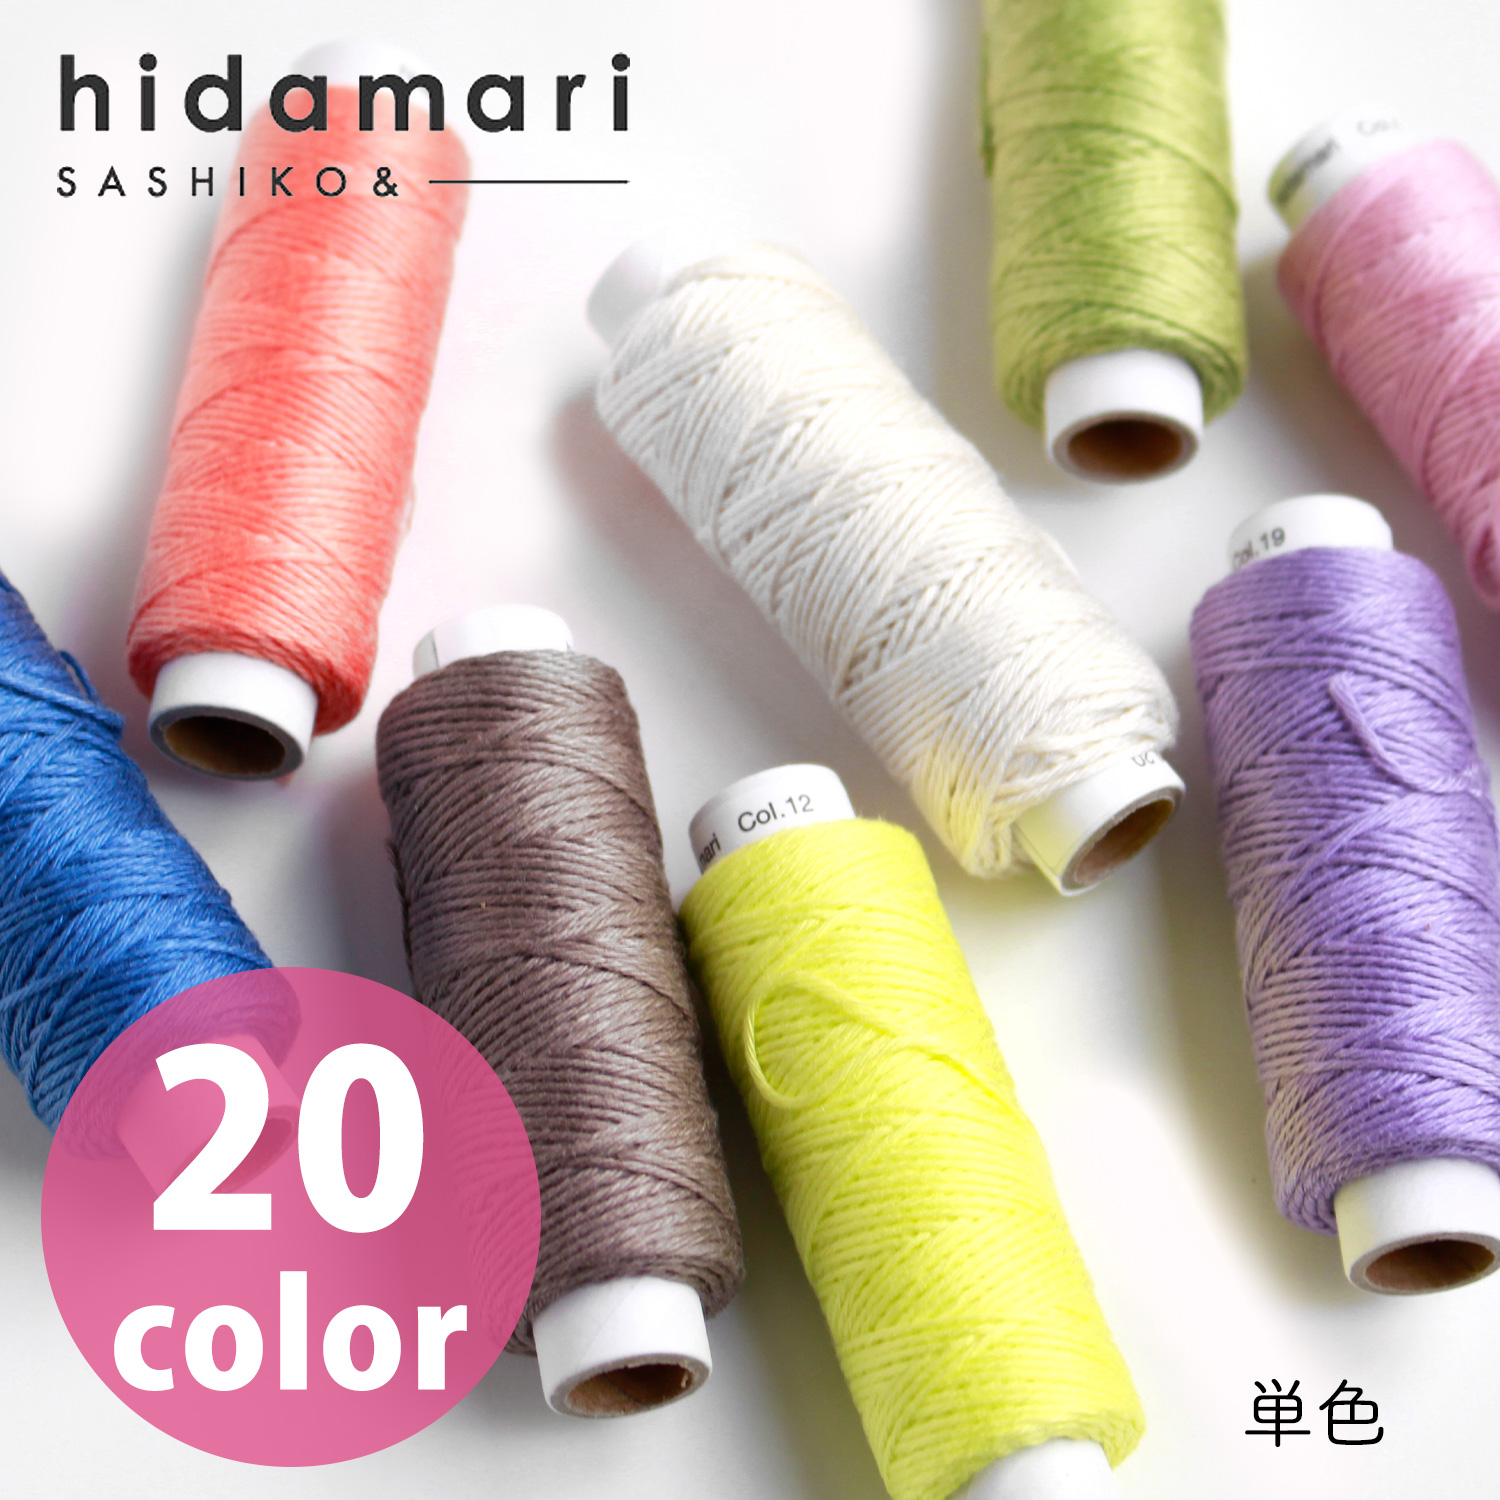 【renewal】CS122301 Cosmo Sashiko Thread (Solid Color) - hidamari - (pcs)